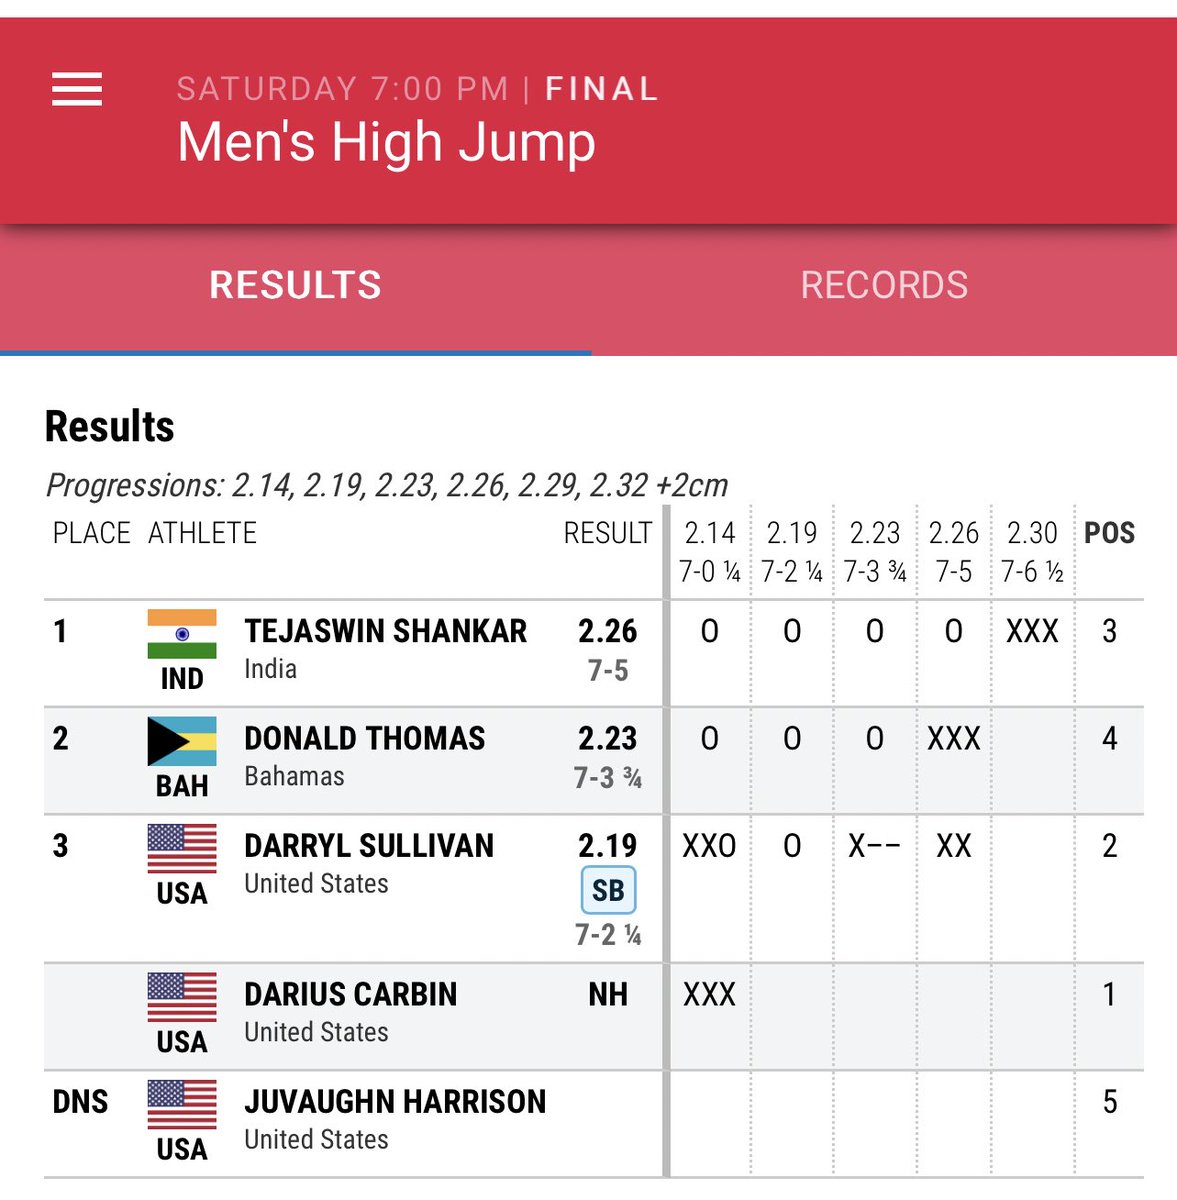 Tejaswin Shankar win mens high jump event of New Balance Indoor Grand Prix #WorldIndoorTour with a jump of 2.26m